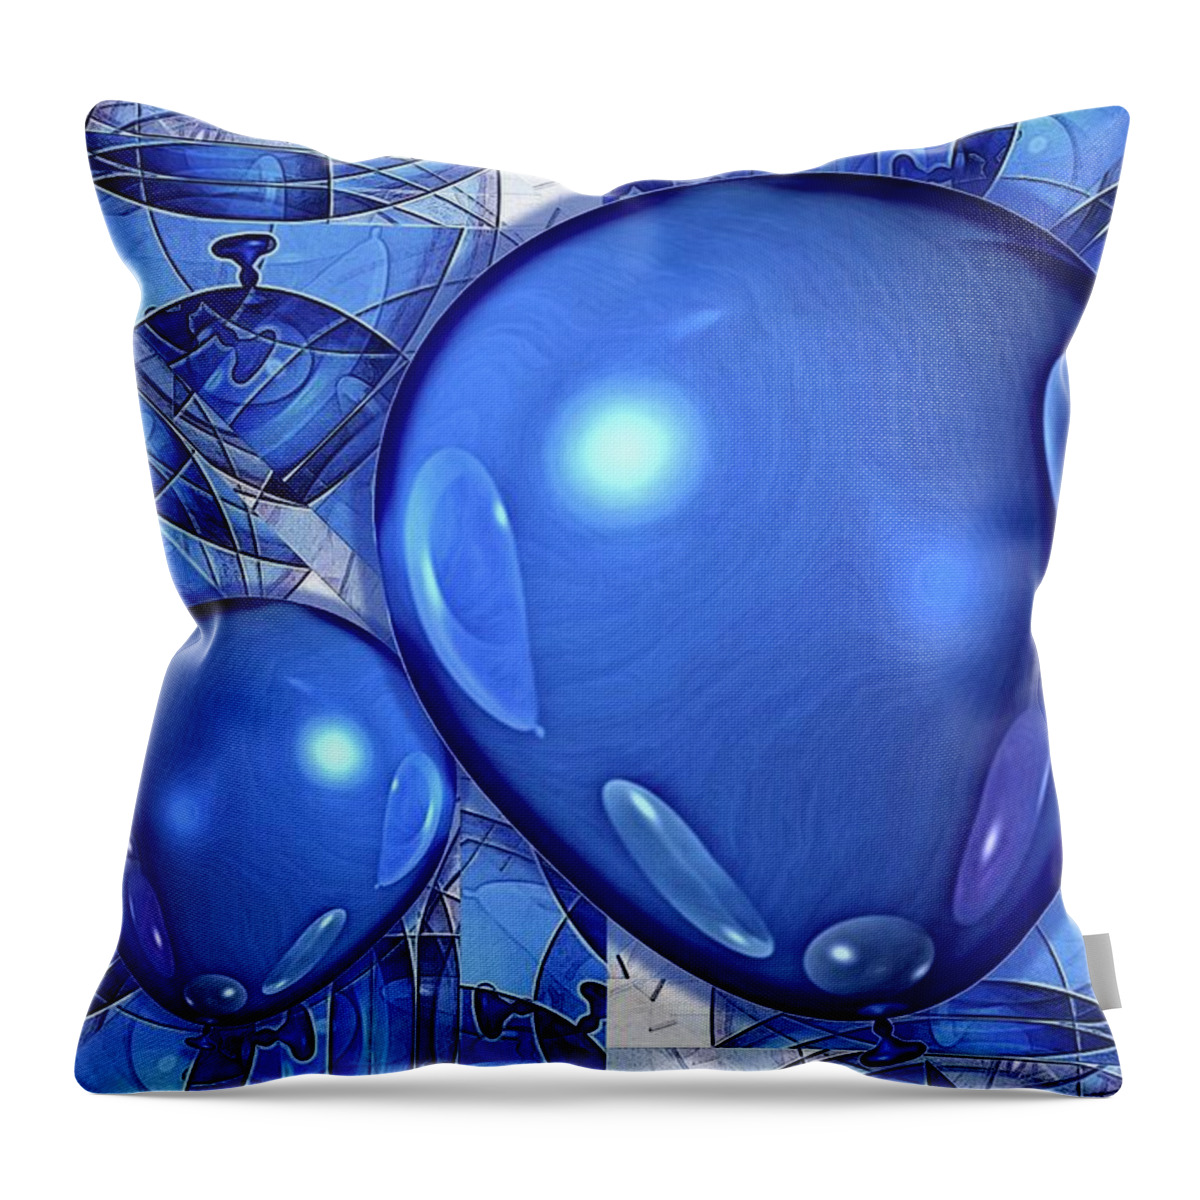 Distortion Throw Pillow featuring the digital art Balloons by Ronald Bissett